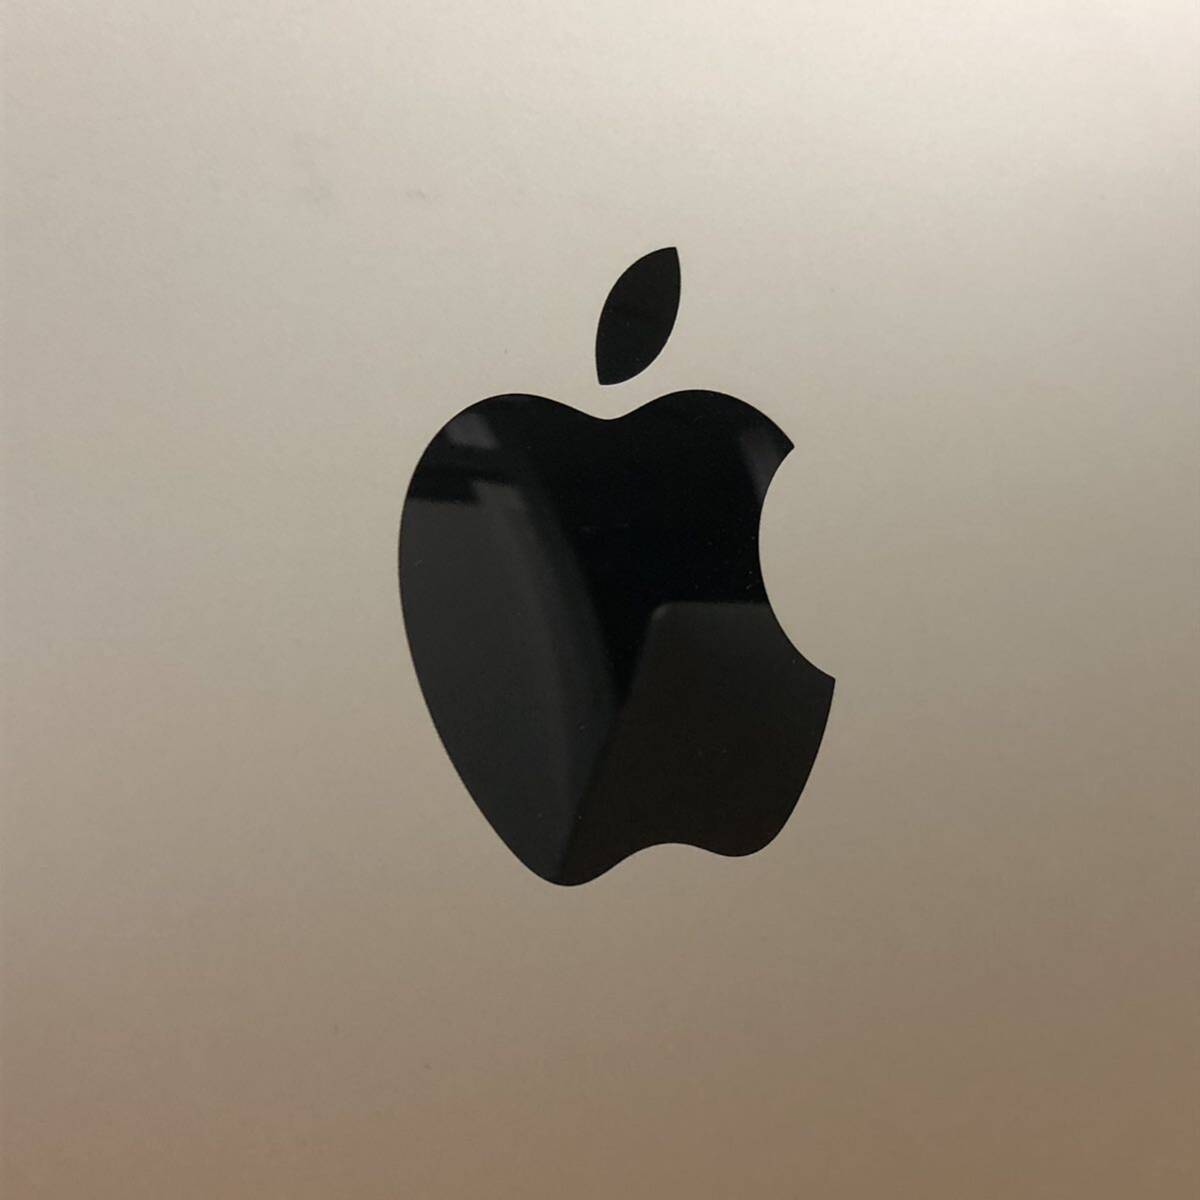 Apple iMac 21.5 4k 2017 model /Core i5/1TB/16GB RAM/Retina